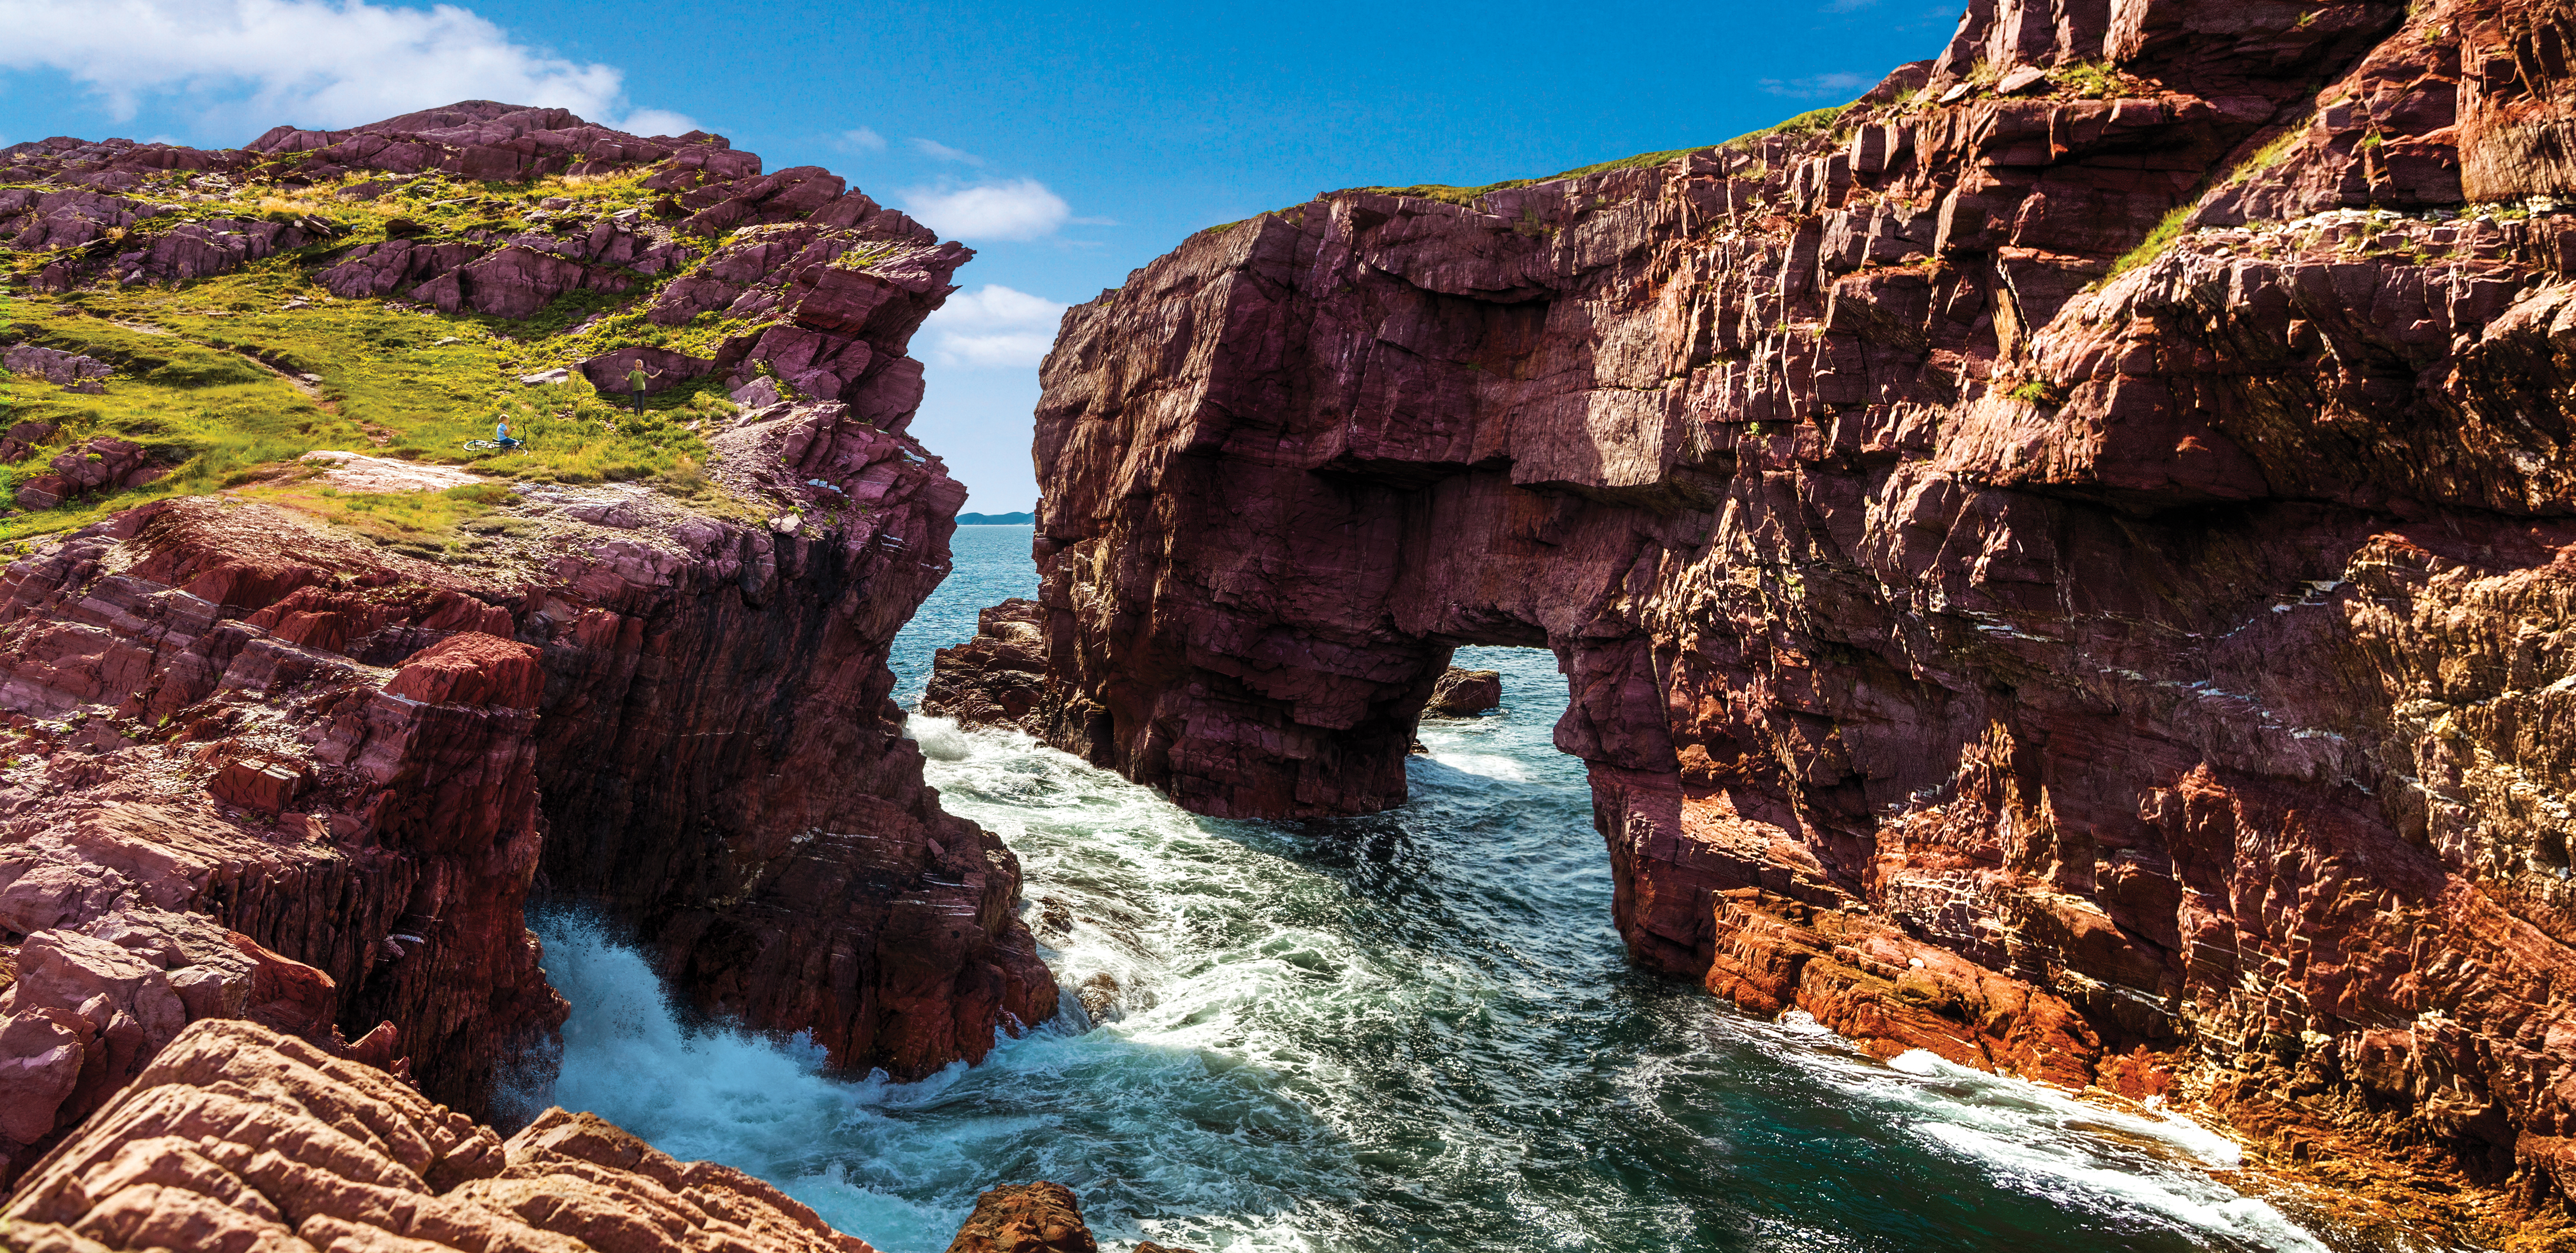 Tickle Cove Sea Arch, part of the Discovery Geopark on the Bonavista Peninsula